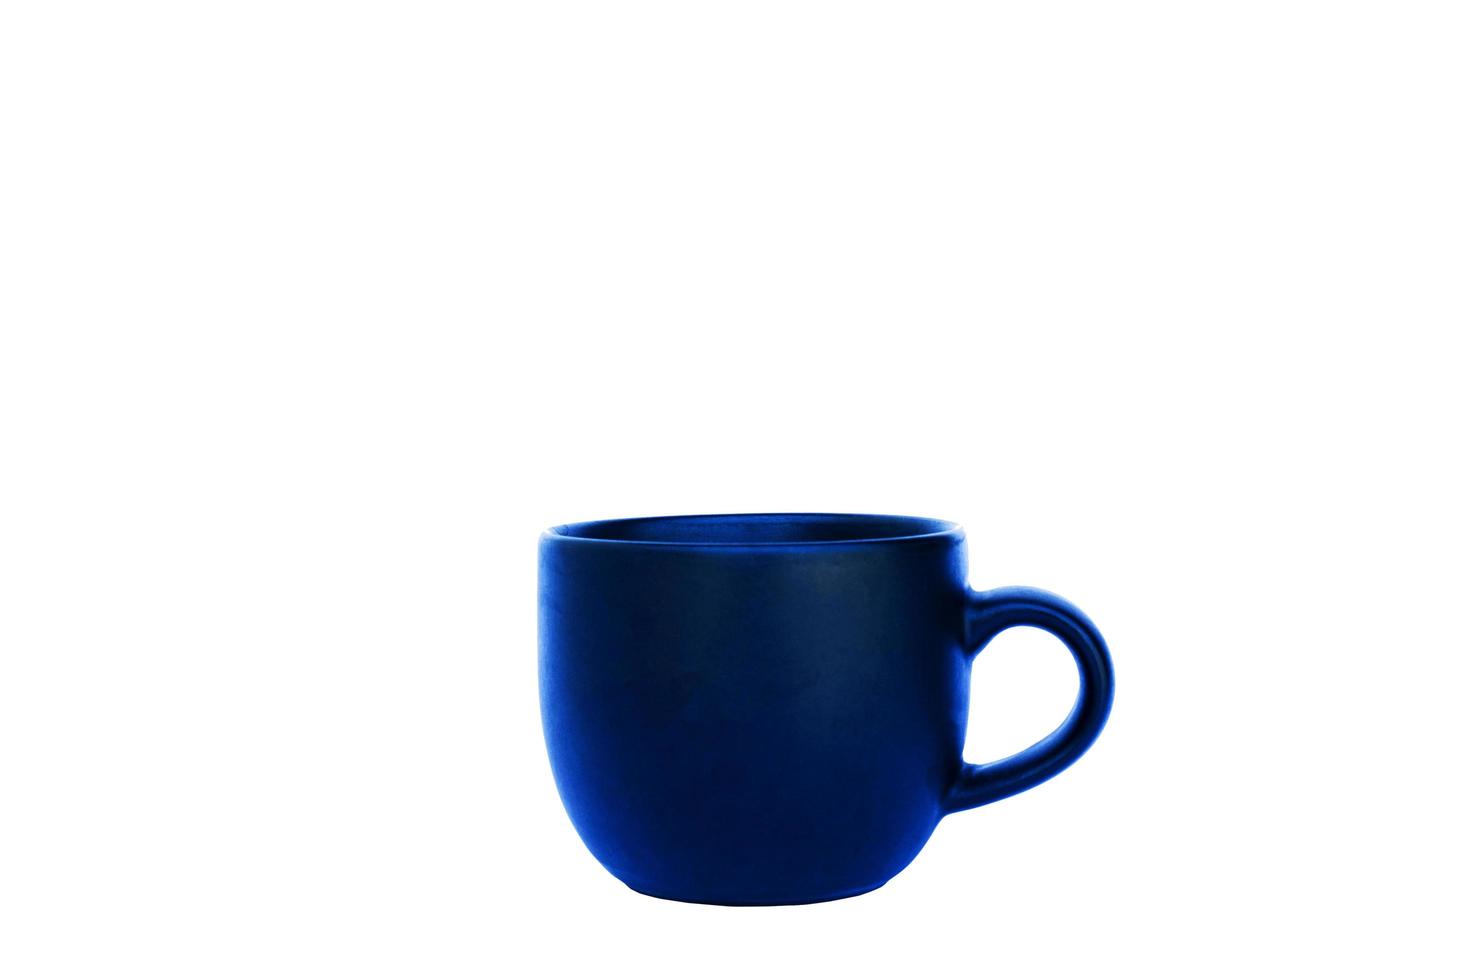 blå kopp isolerad på vit bakgrund med urklippsbana foto